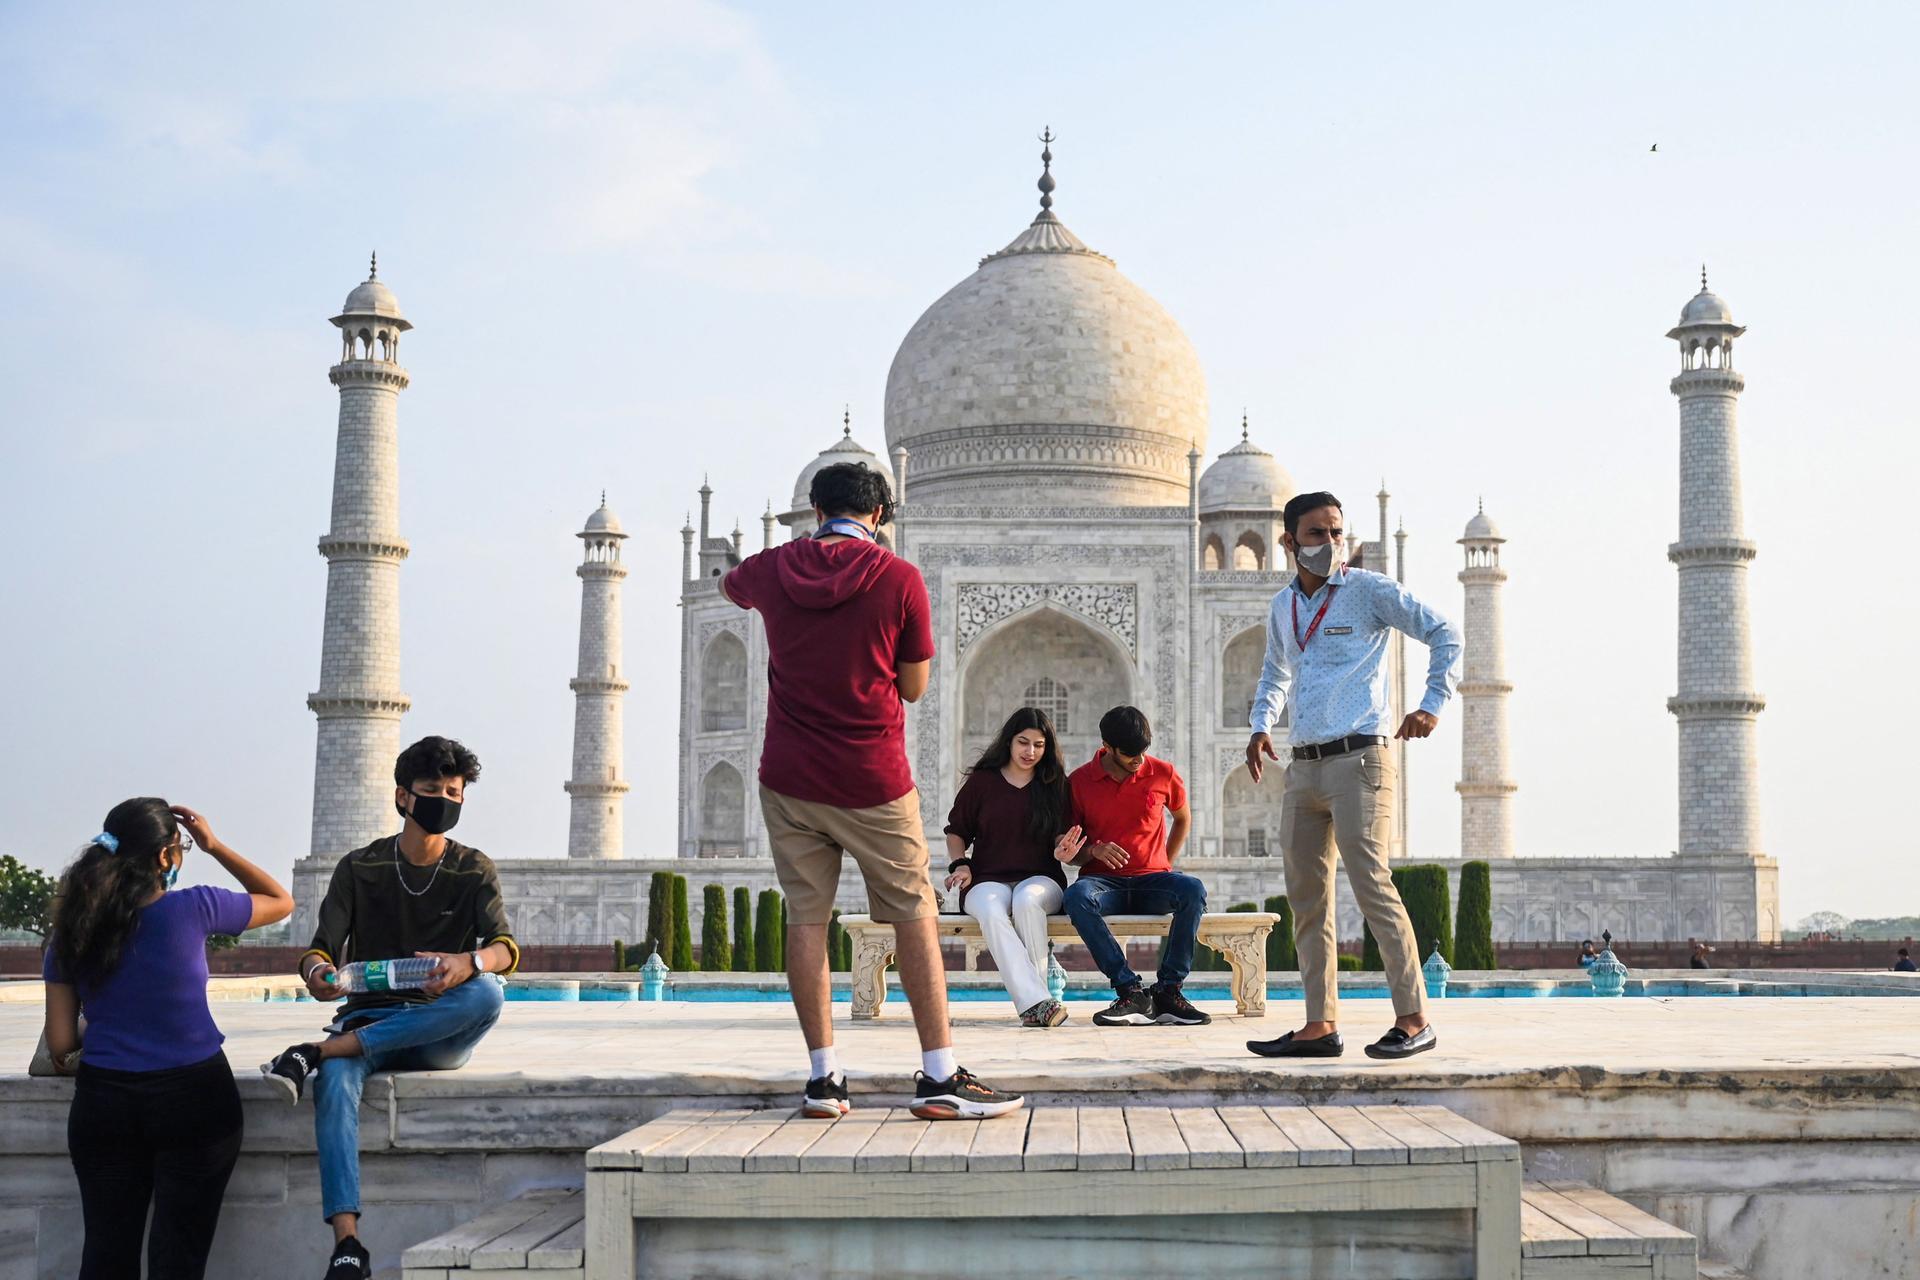 Tourists flock to India's Taj Mahal after Covid-19 closure